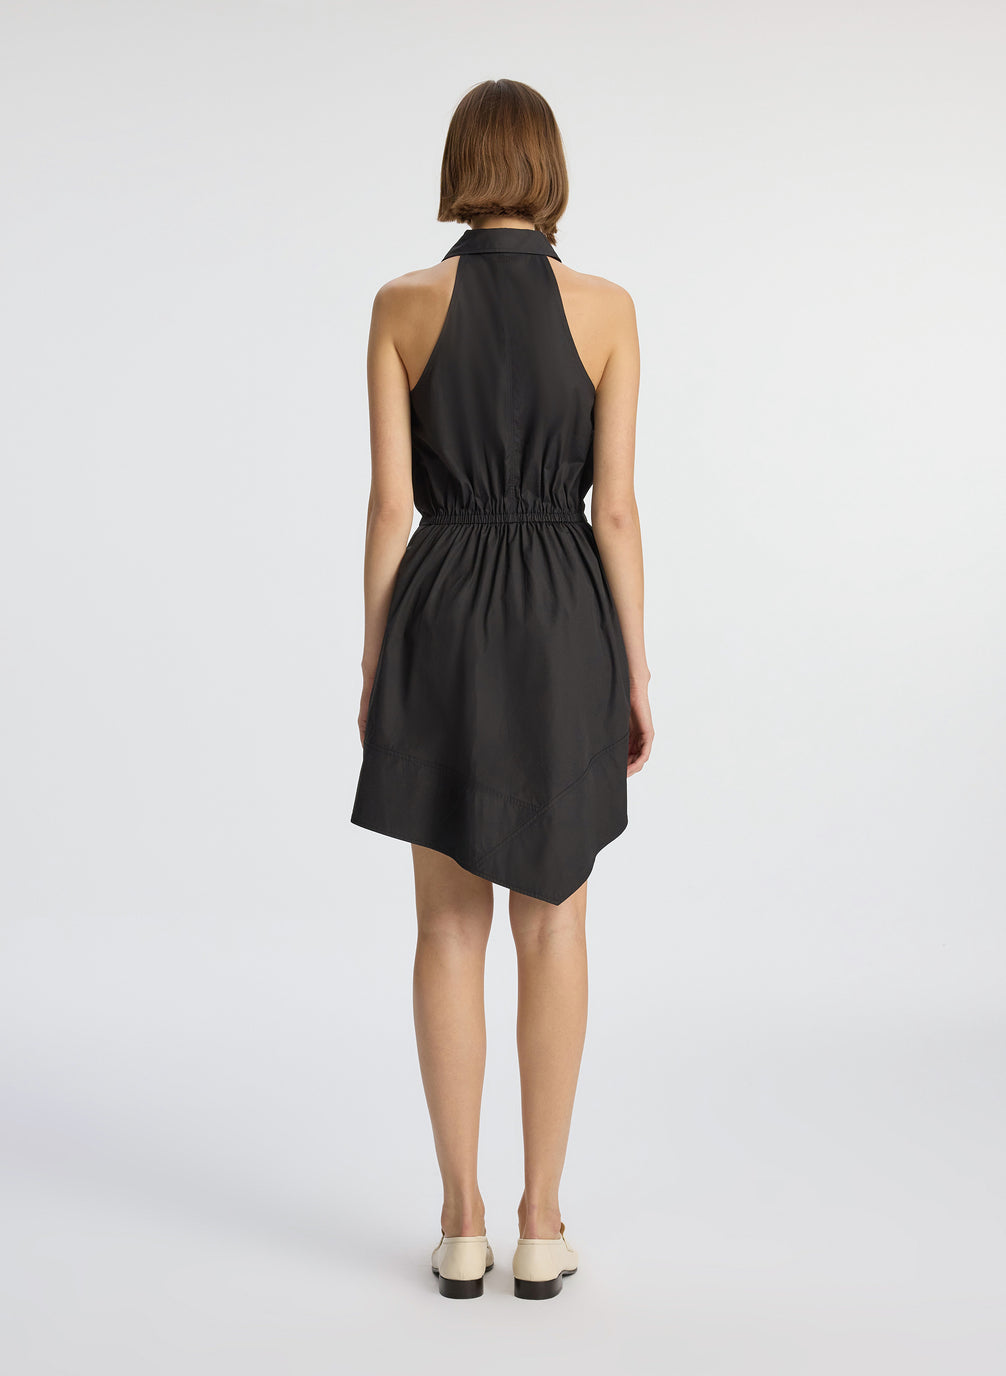 back view of woman wearing black sleeveless collared mini dress